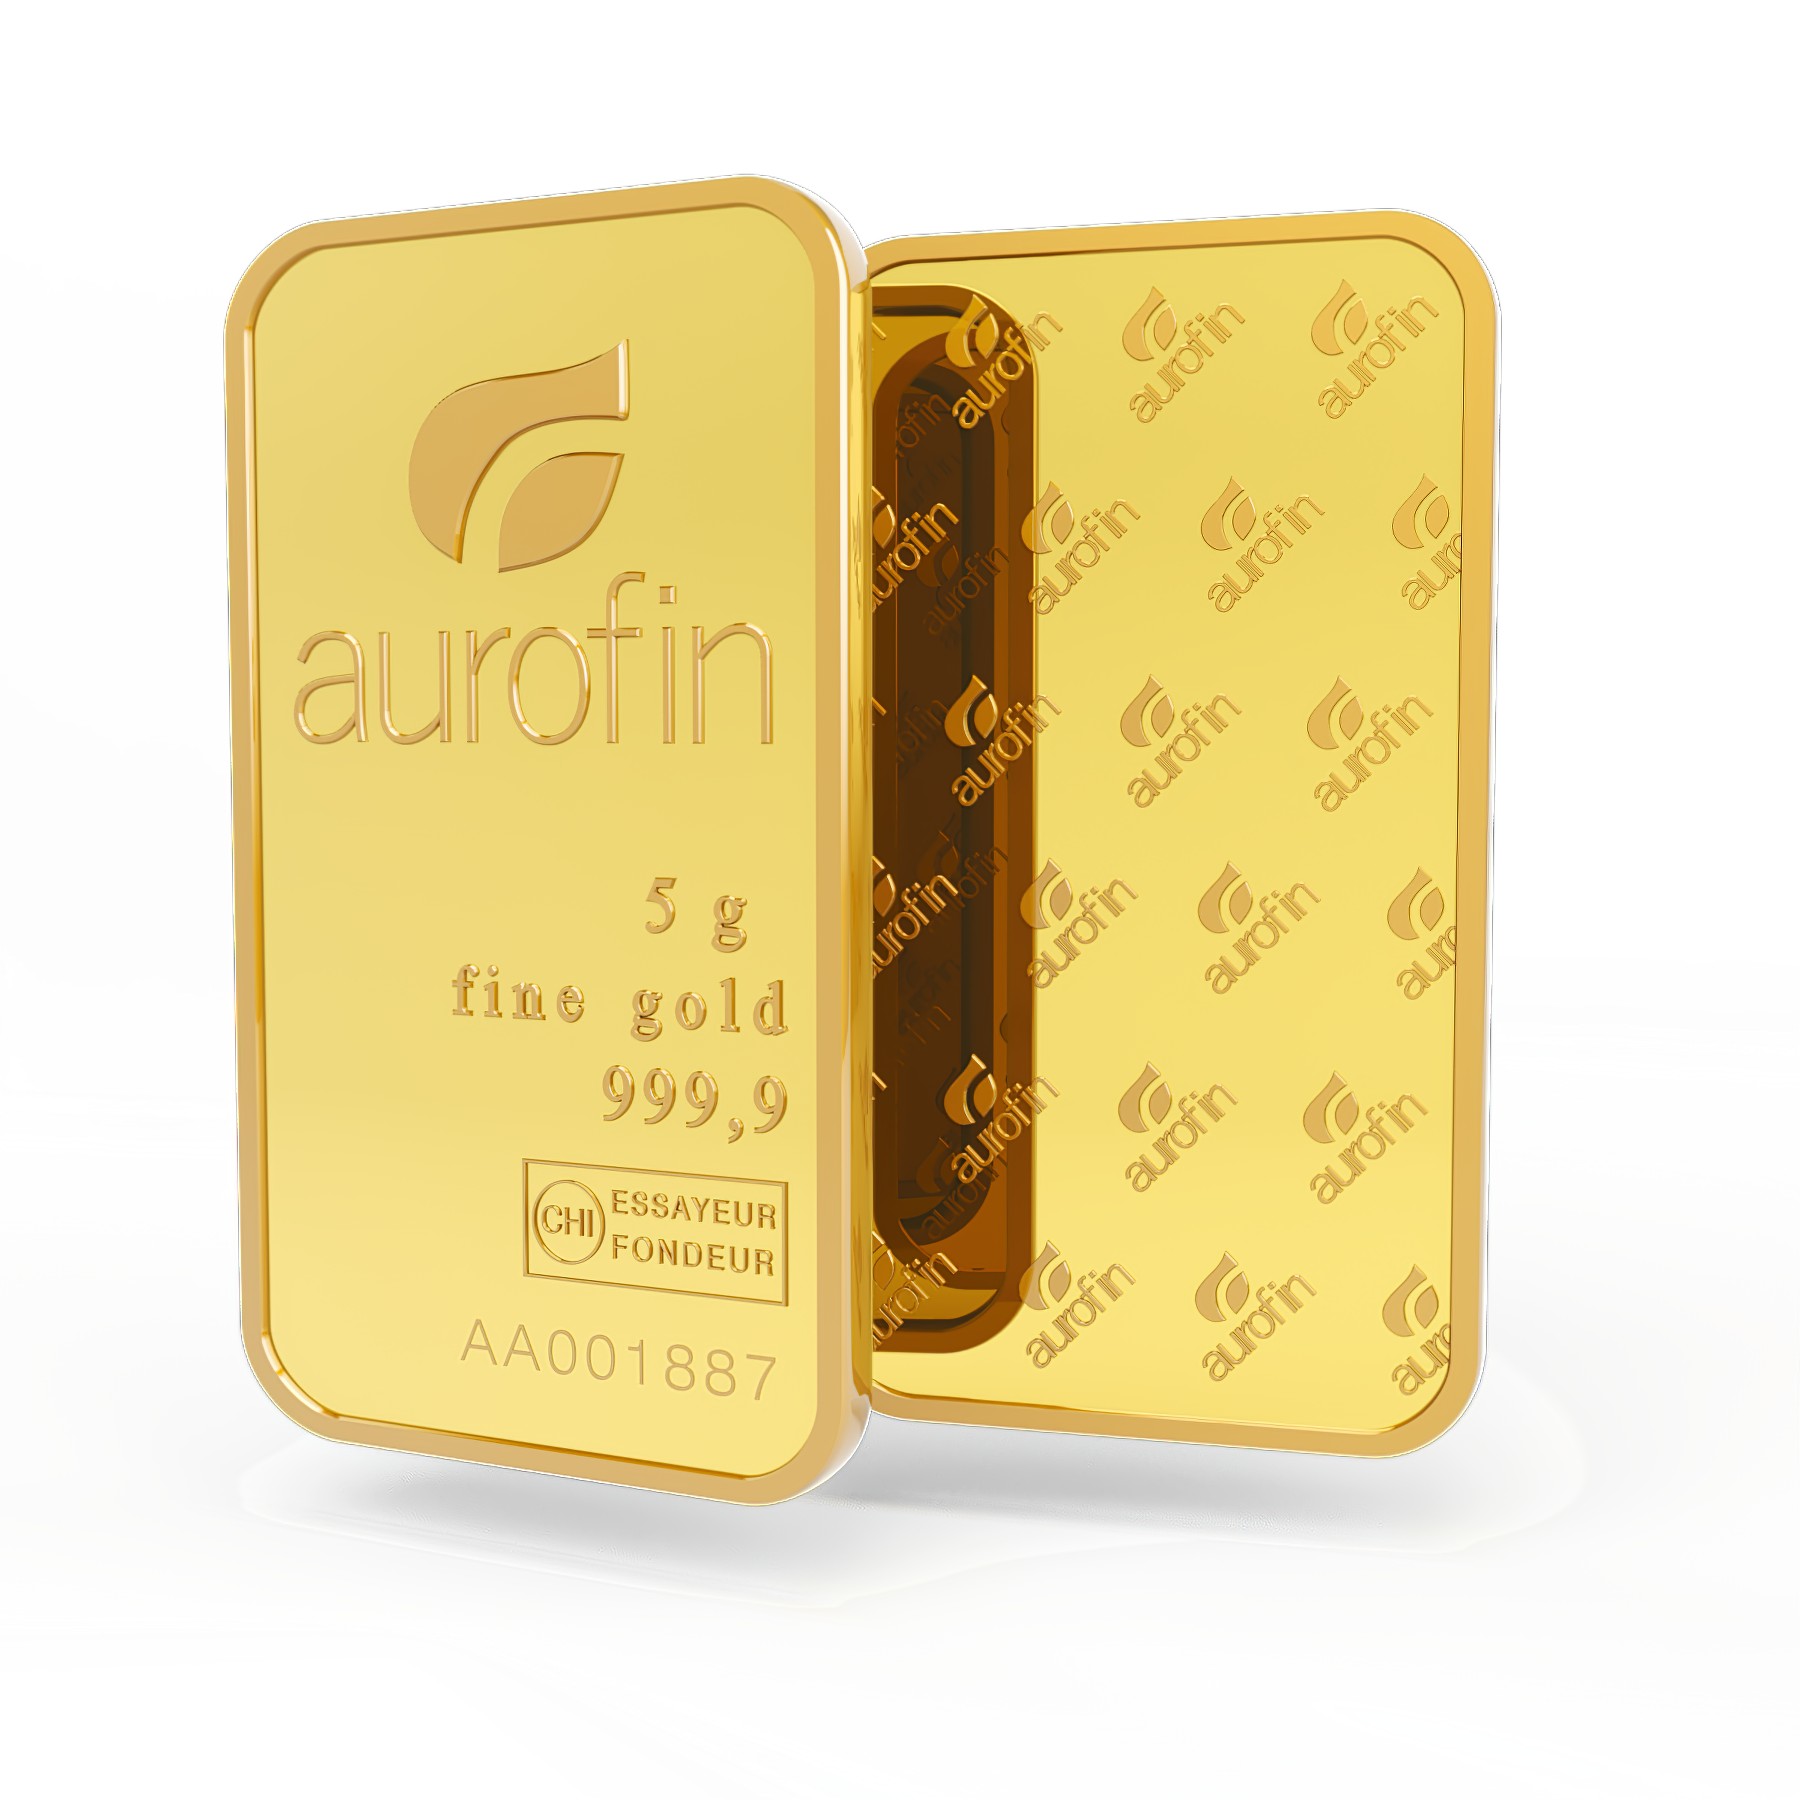 Aranyrúd 5 gr, Svájc, Fine Gold 999,9